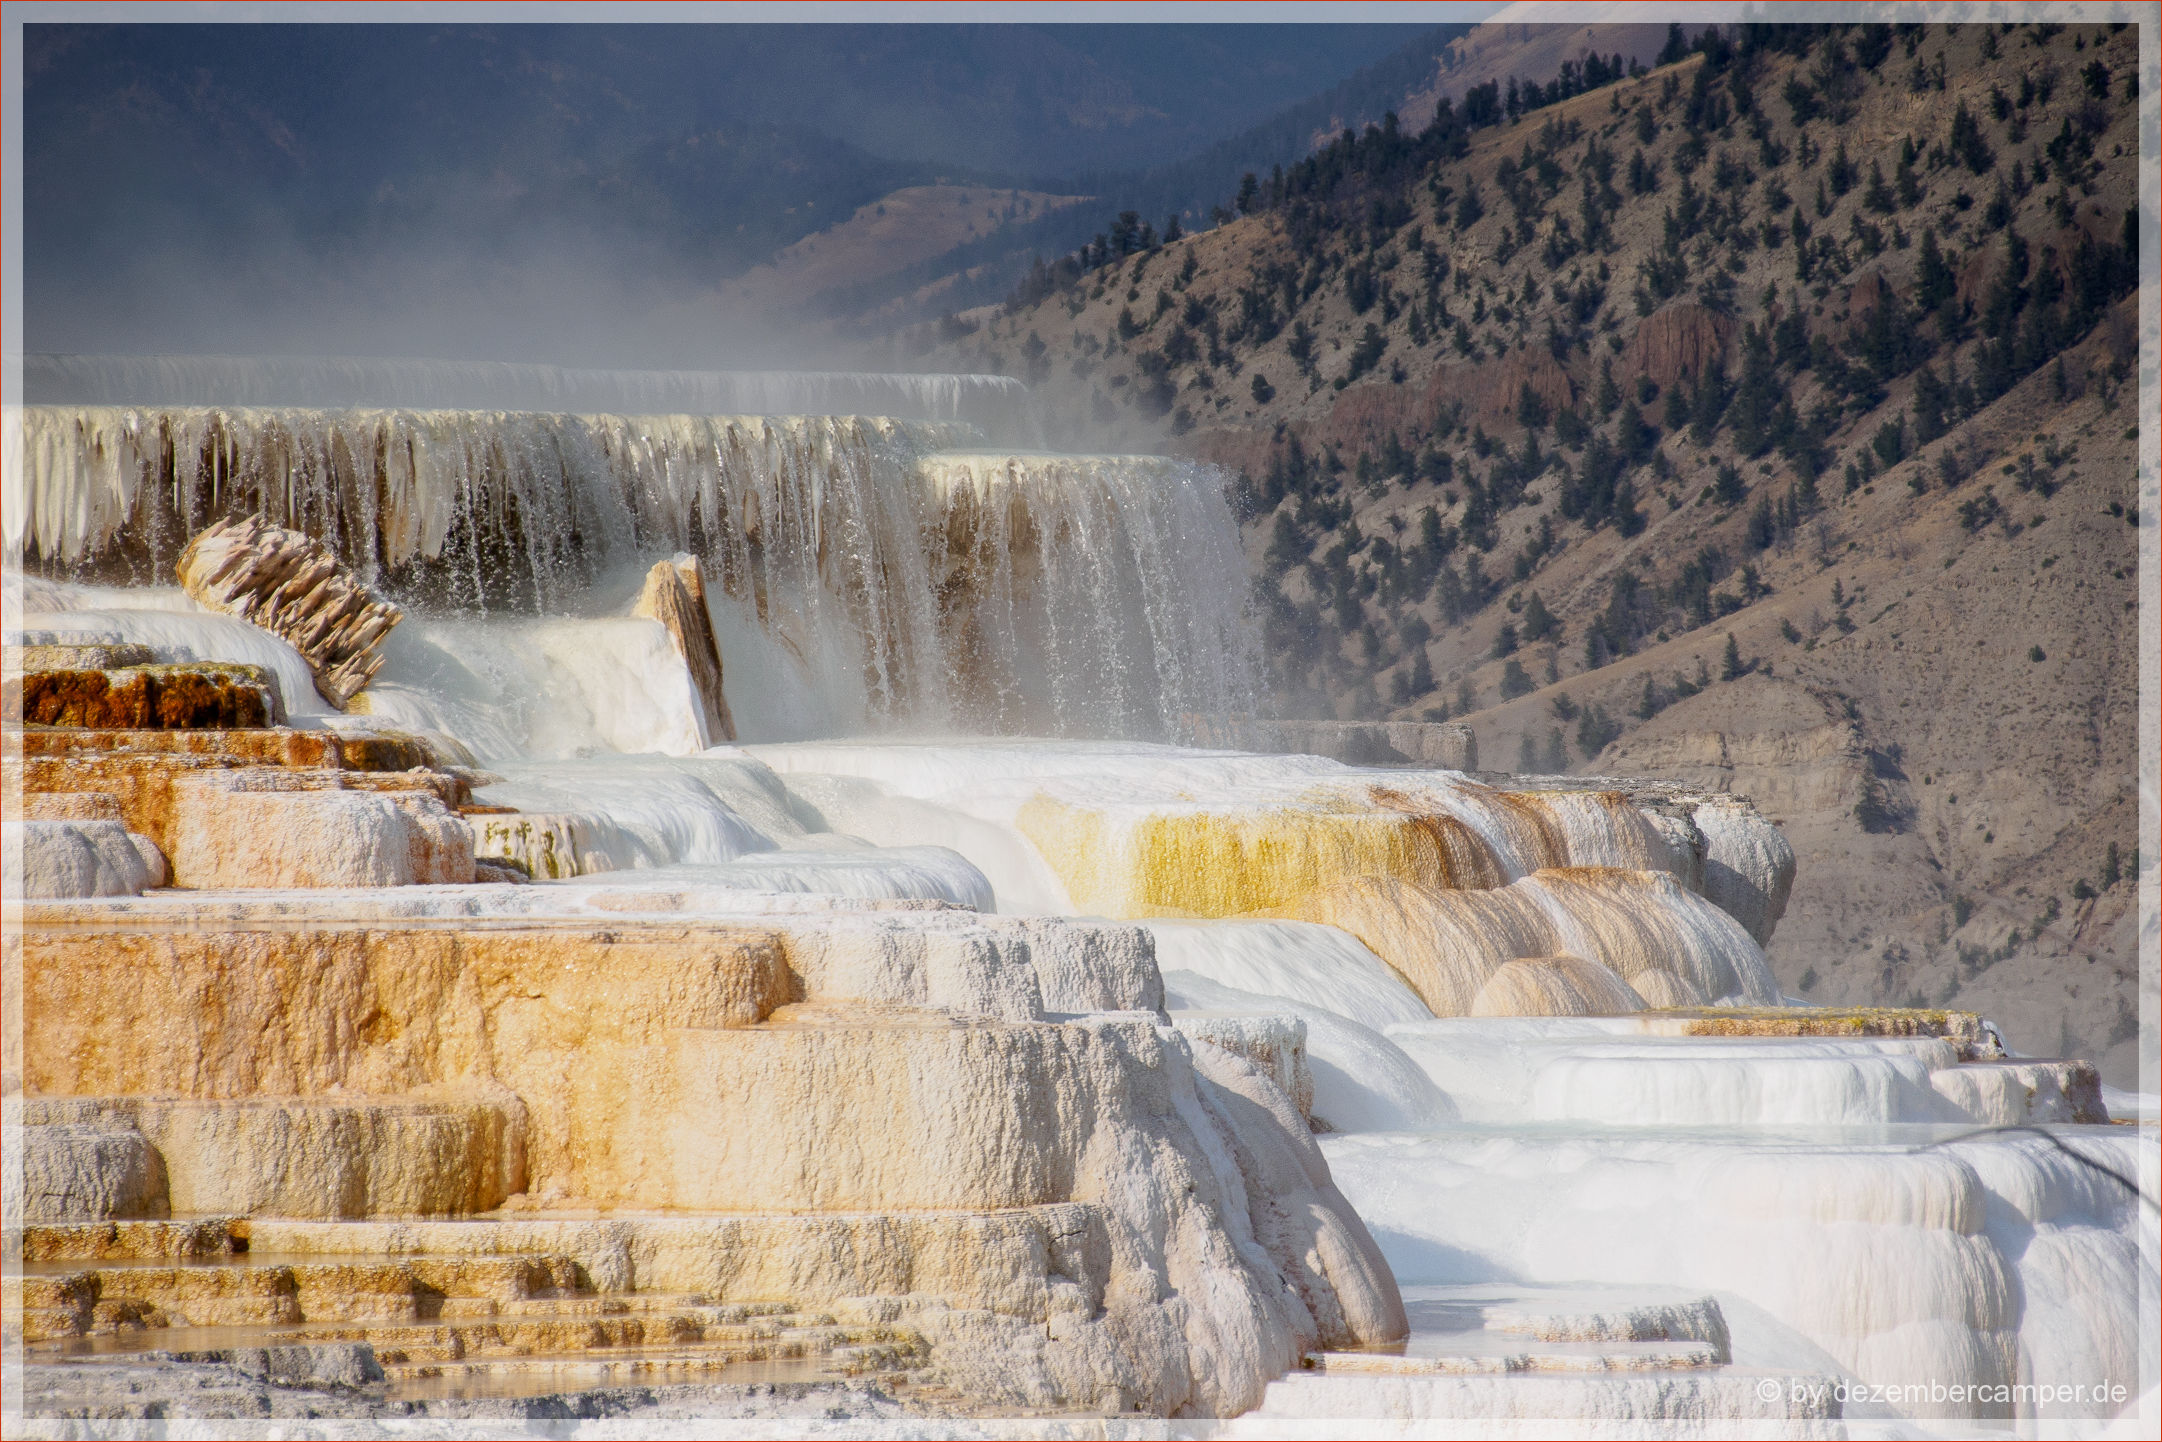 Yellowstone NP - Mammoth Hot Springs